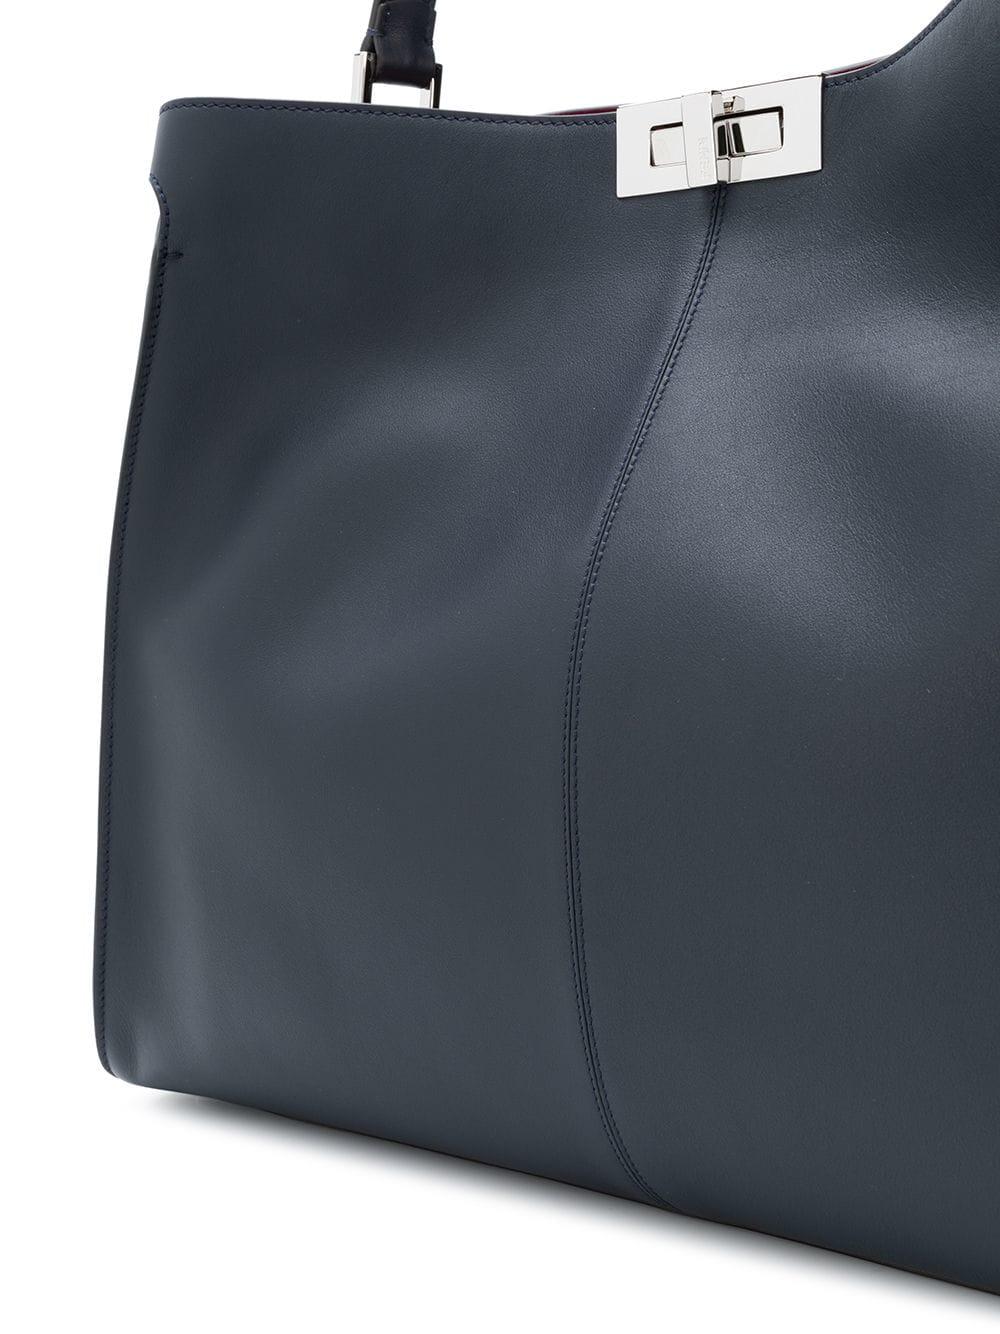 Fendi Peekaboo X-Lite Tote Bags for Women